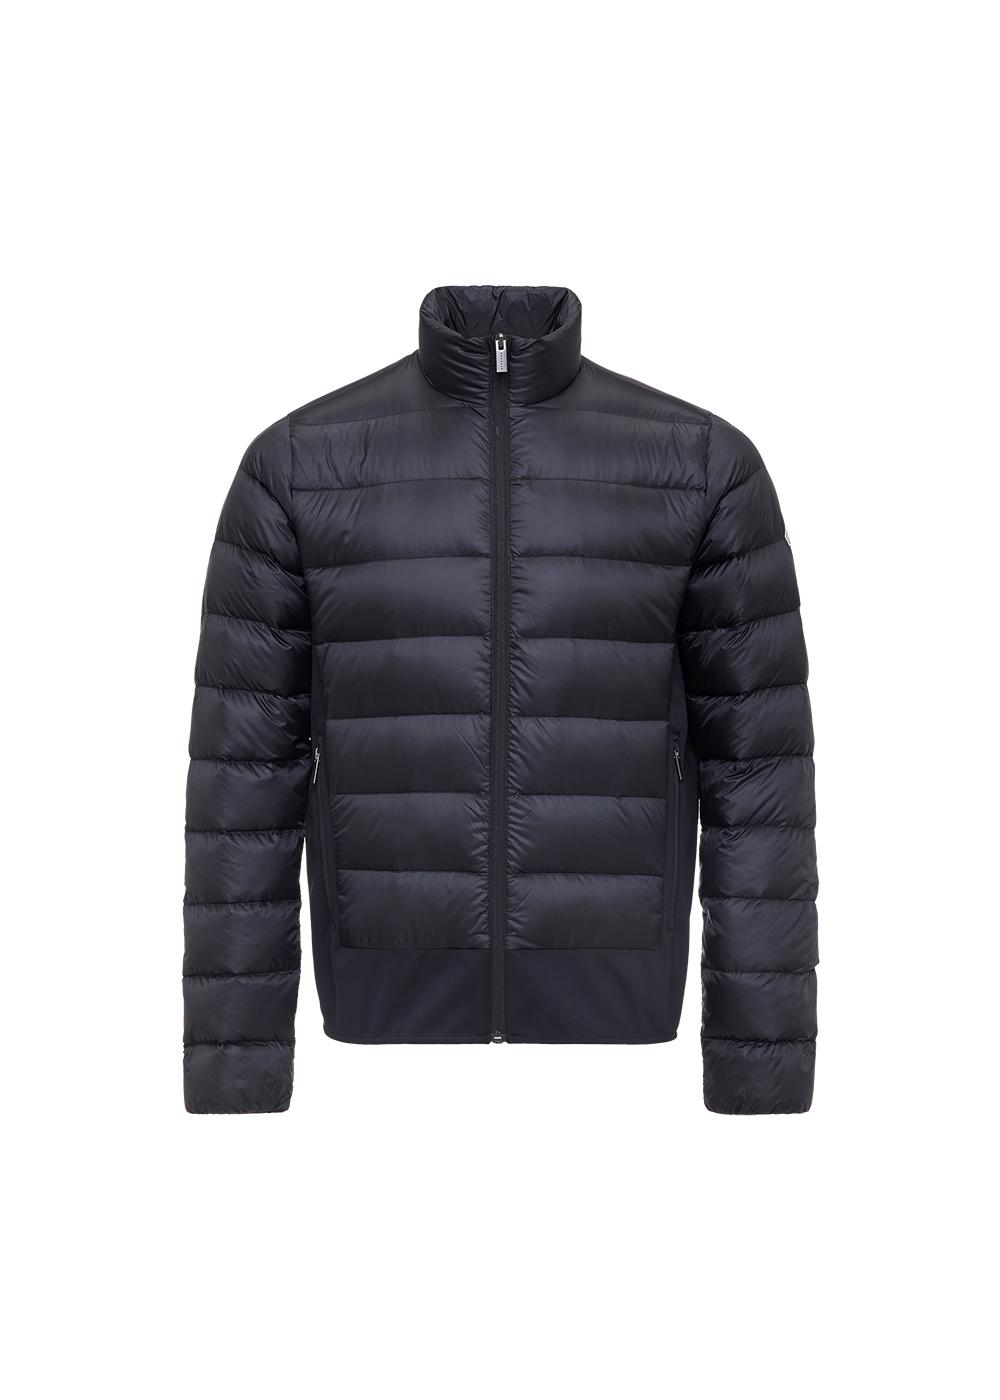 Men's Pyrenex Flow lighweight bi-fabric down jacket black